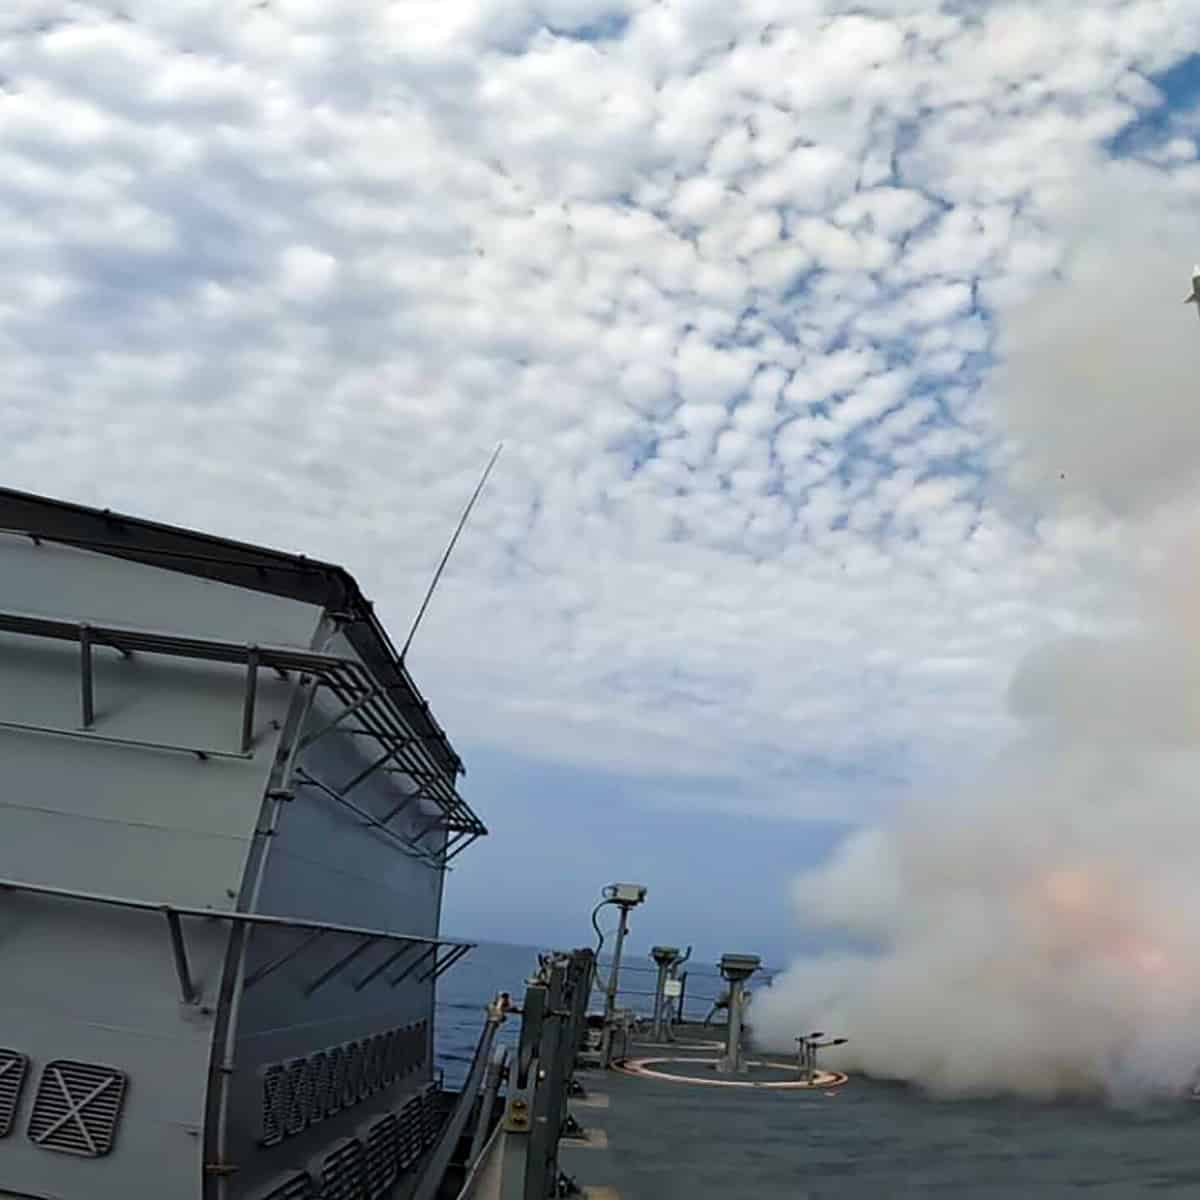 MRSAM successfully test-fired from INS Mormugao